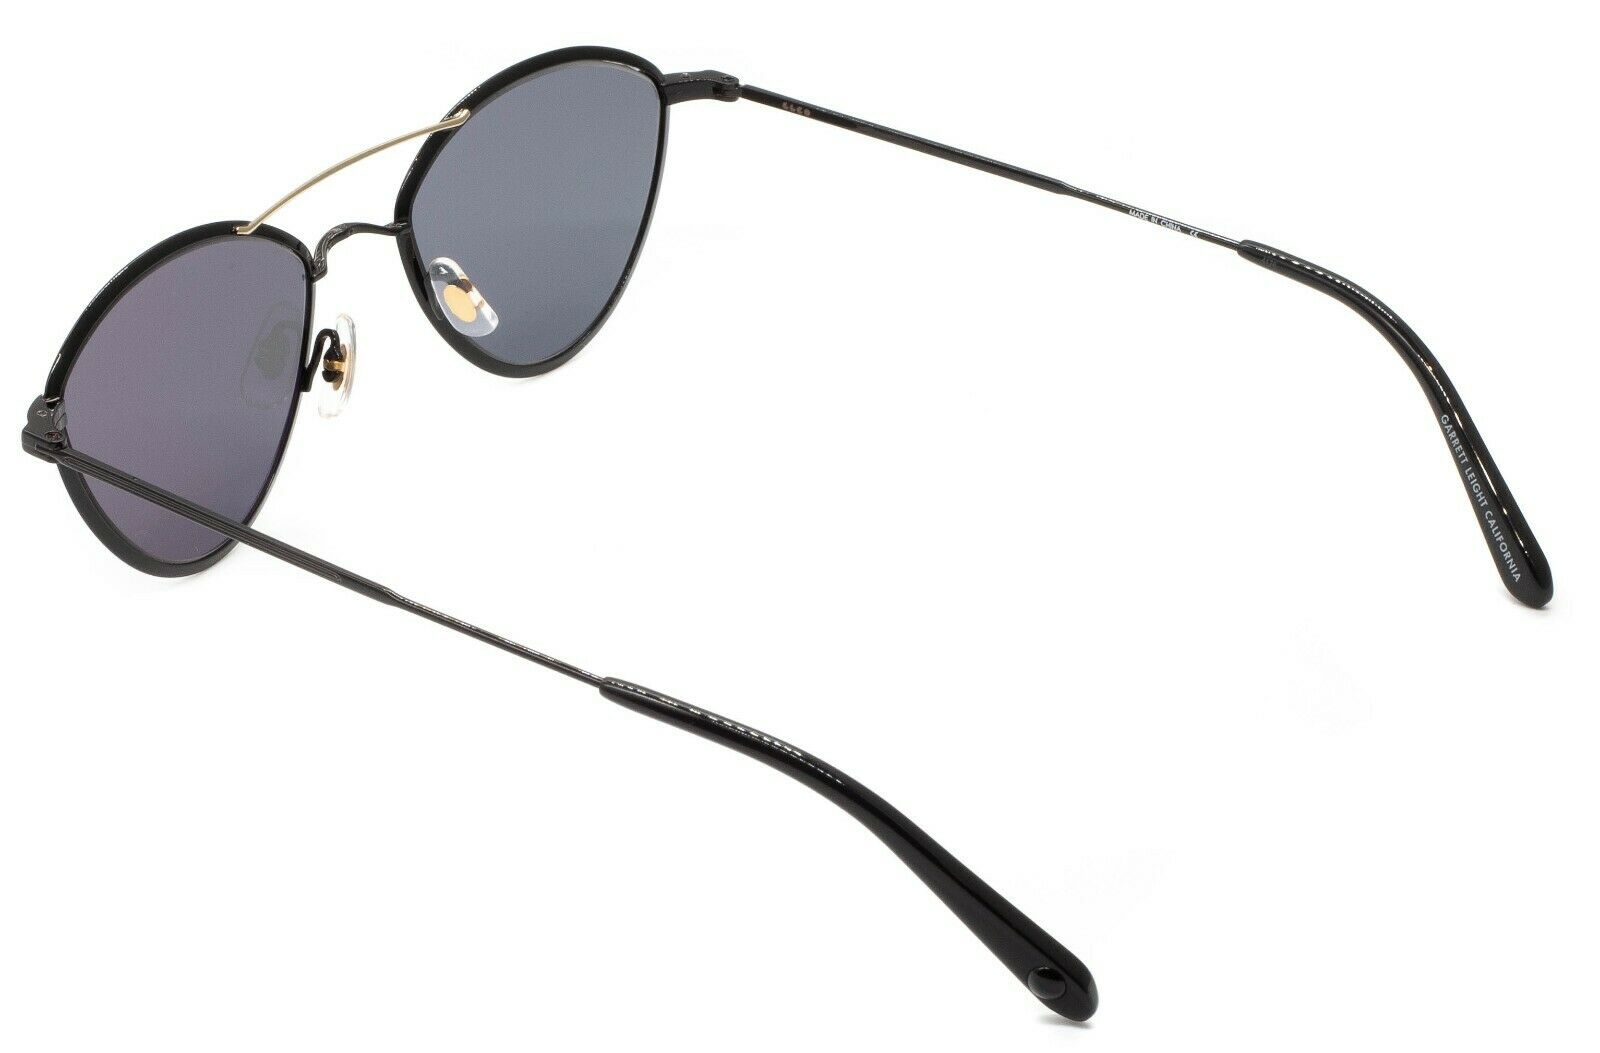 GARRETT LEIGHT CALIFORNIA BREEZE 4051 BK-BK 51mm Sunglasses Shades Frames - New